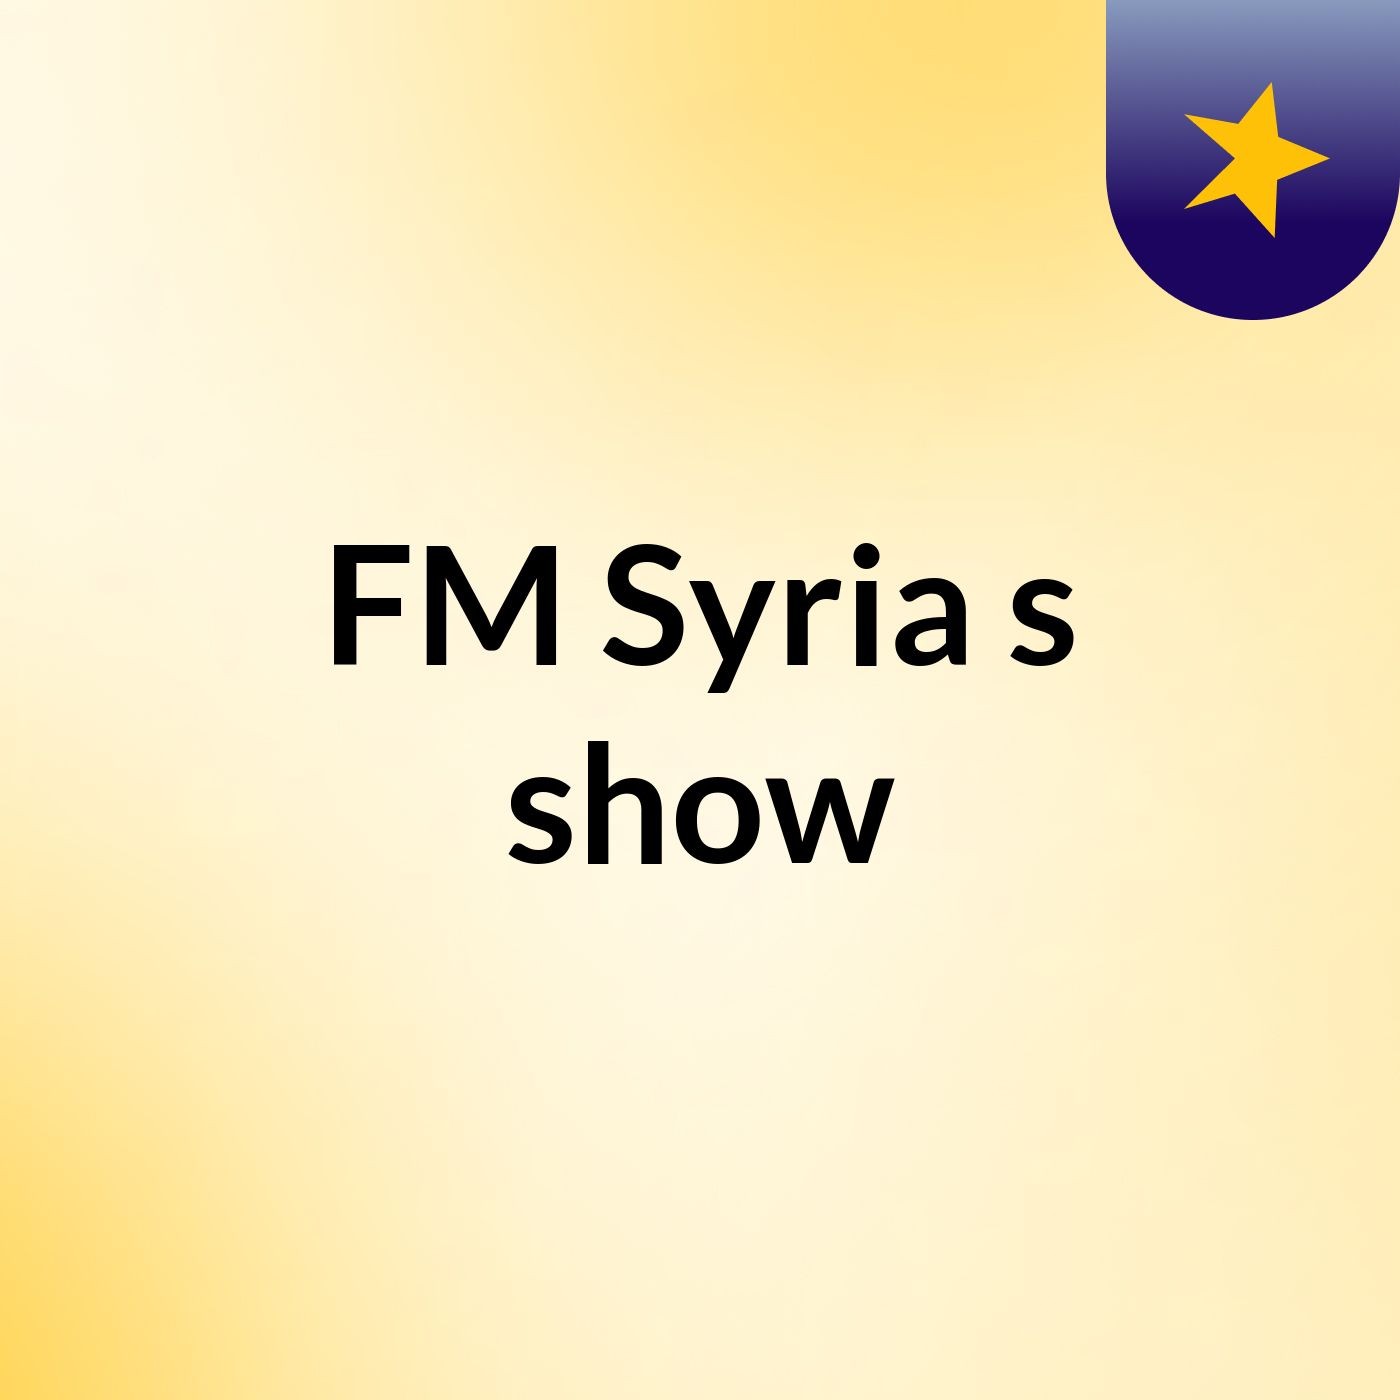 FM Syria's show